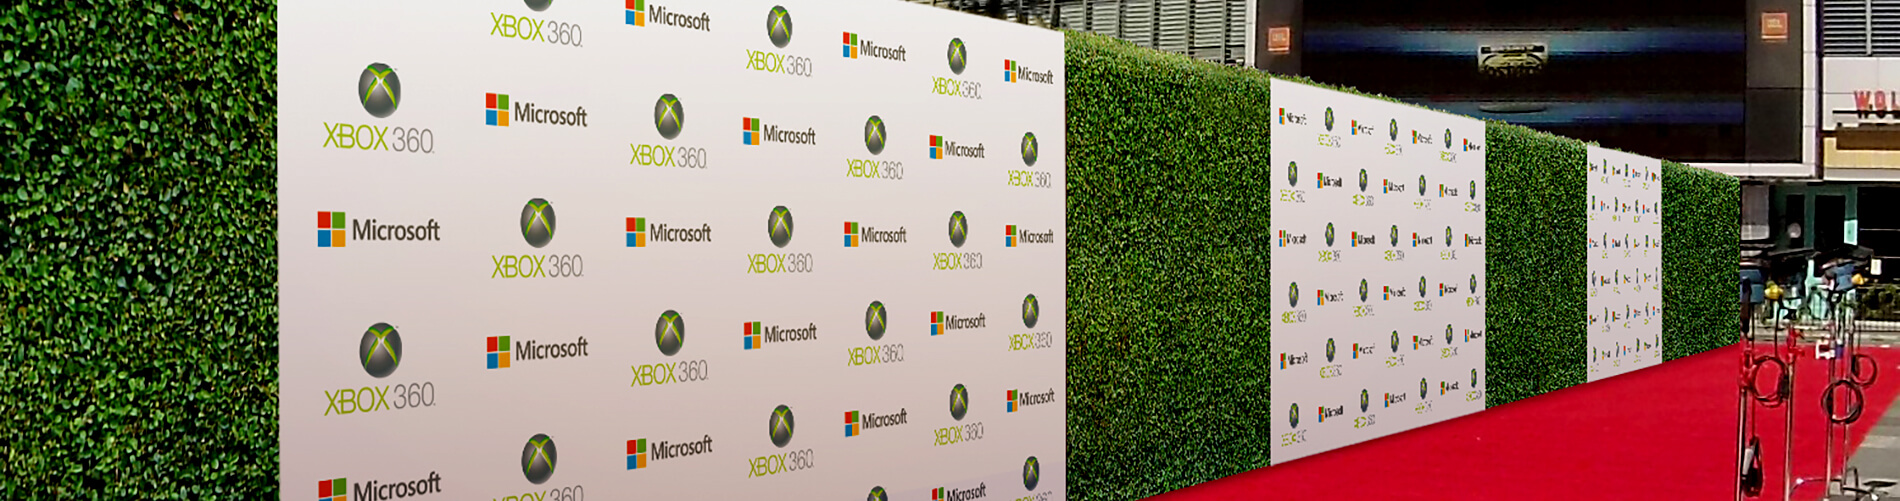 Xbox media wall with hedge walls